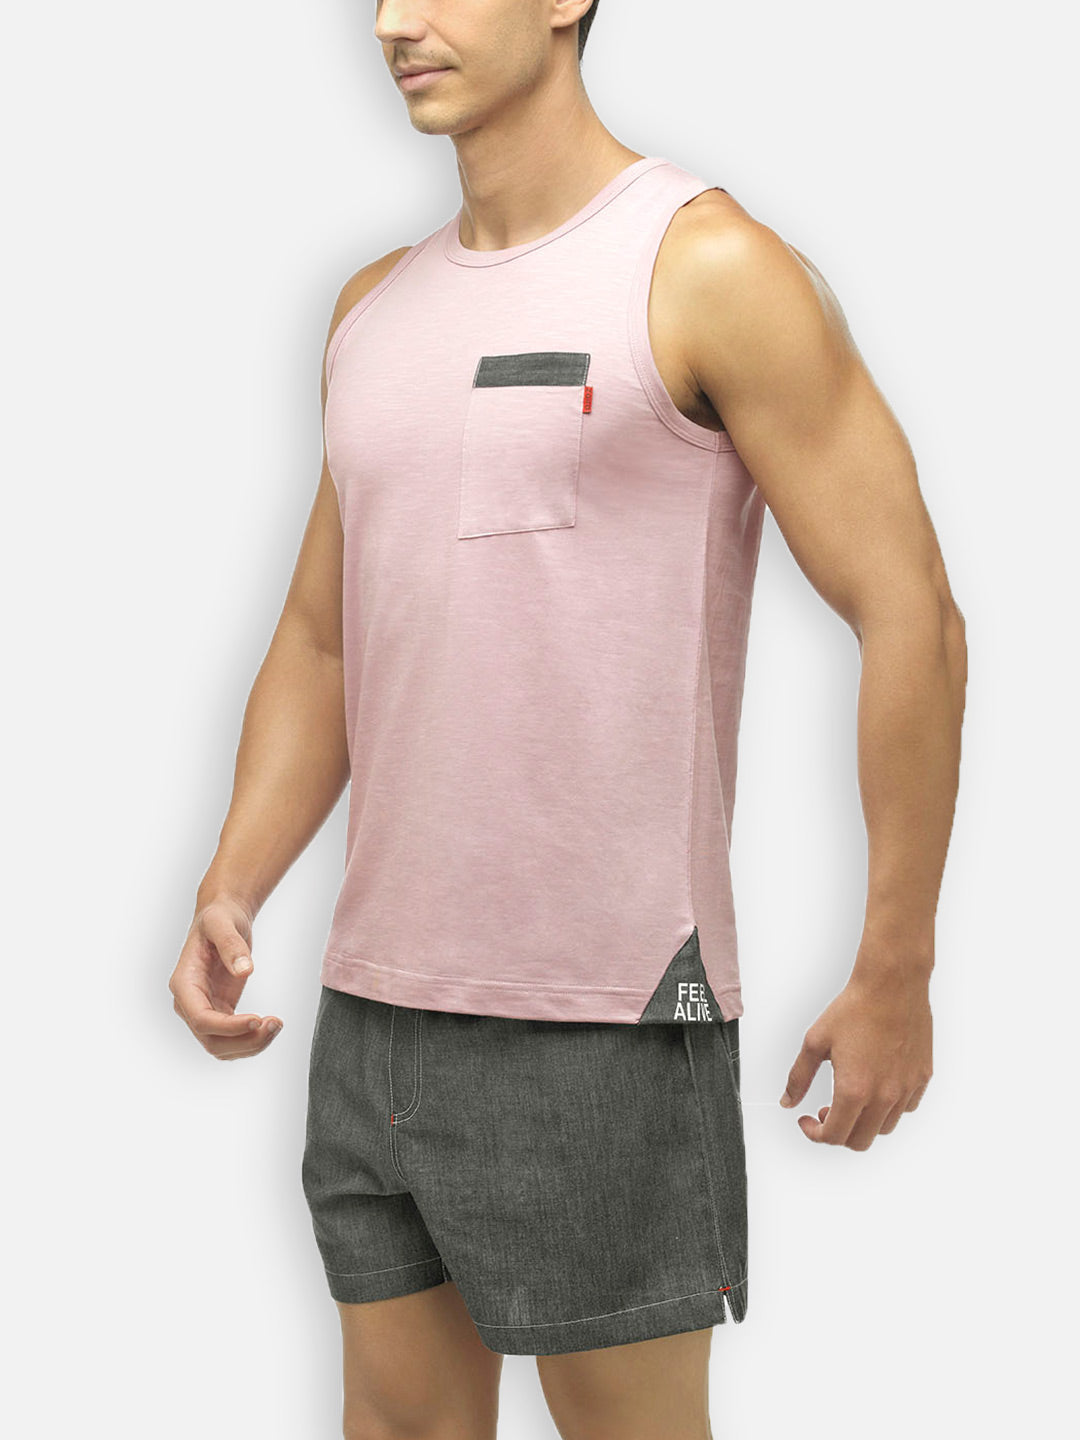 Zoiro Men&#39;s Cotton Solid Vest - Pack Of 2